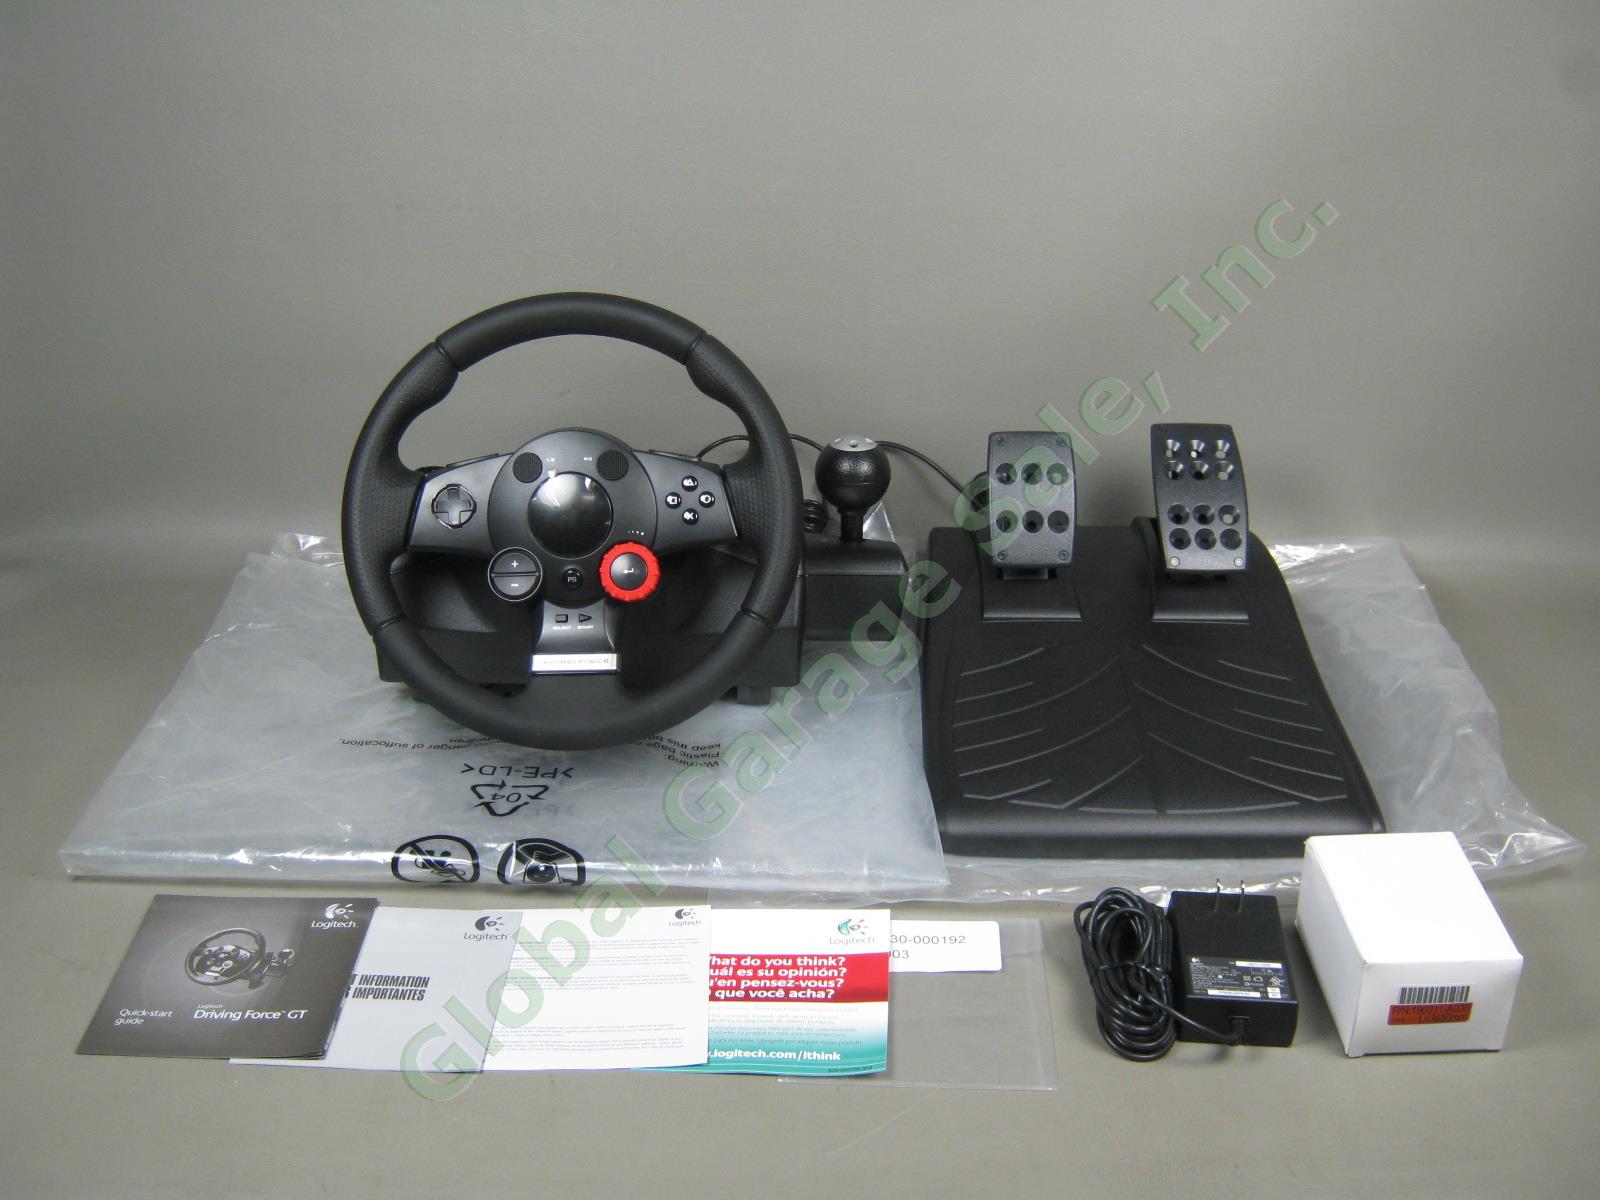 Logitech Driving Force GT Feedback E-X5C19 PS3 PS2 PC Racing Wheel Pedal MINT!!